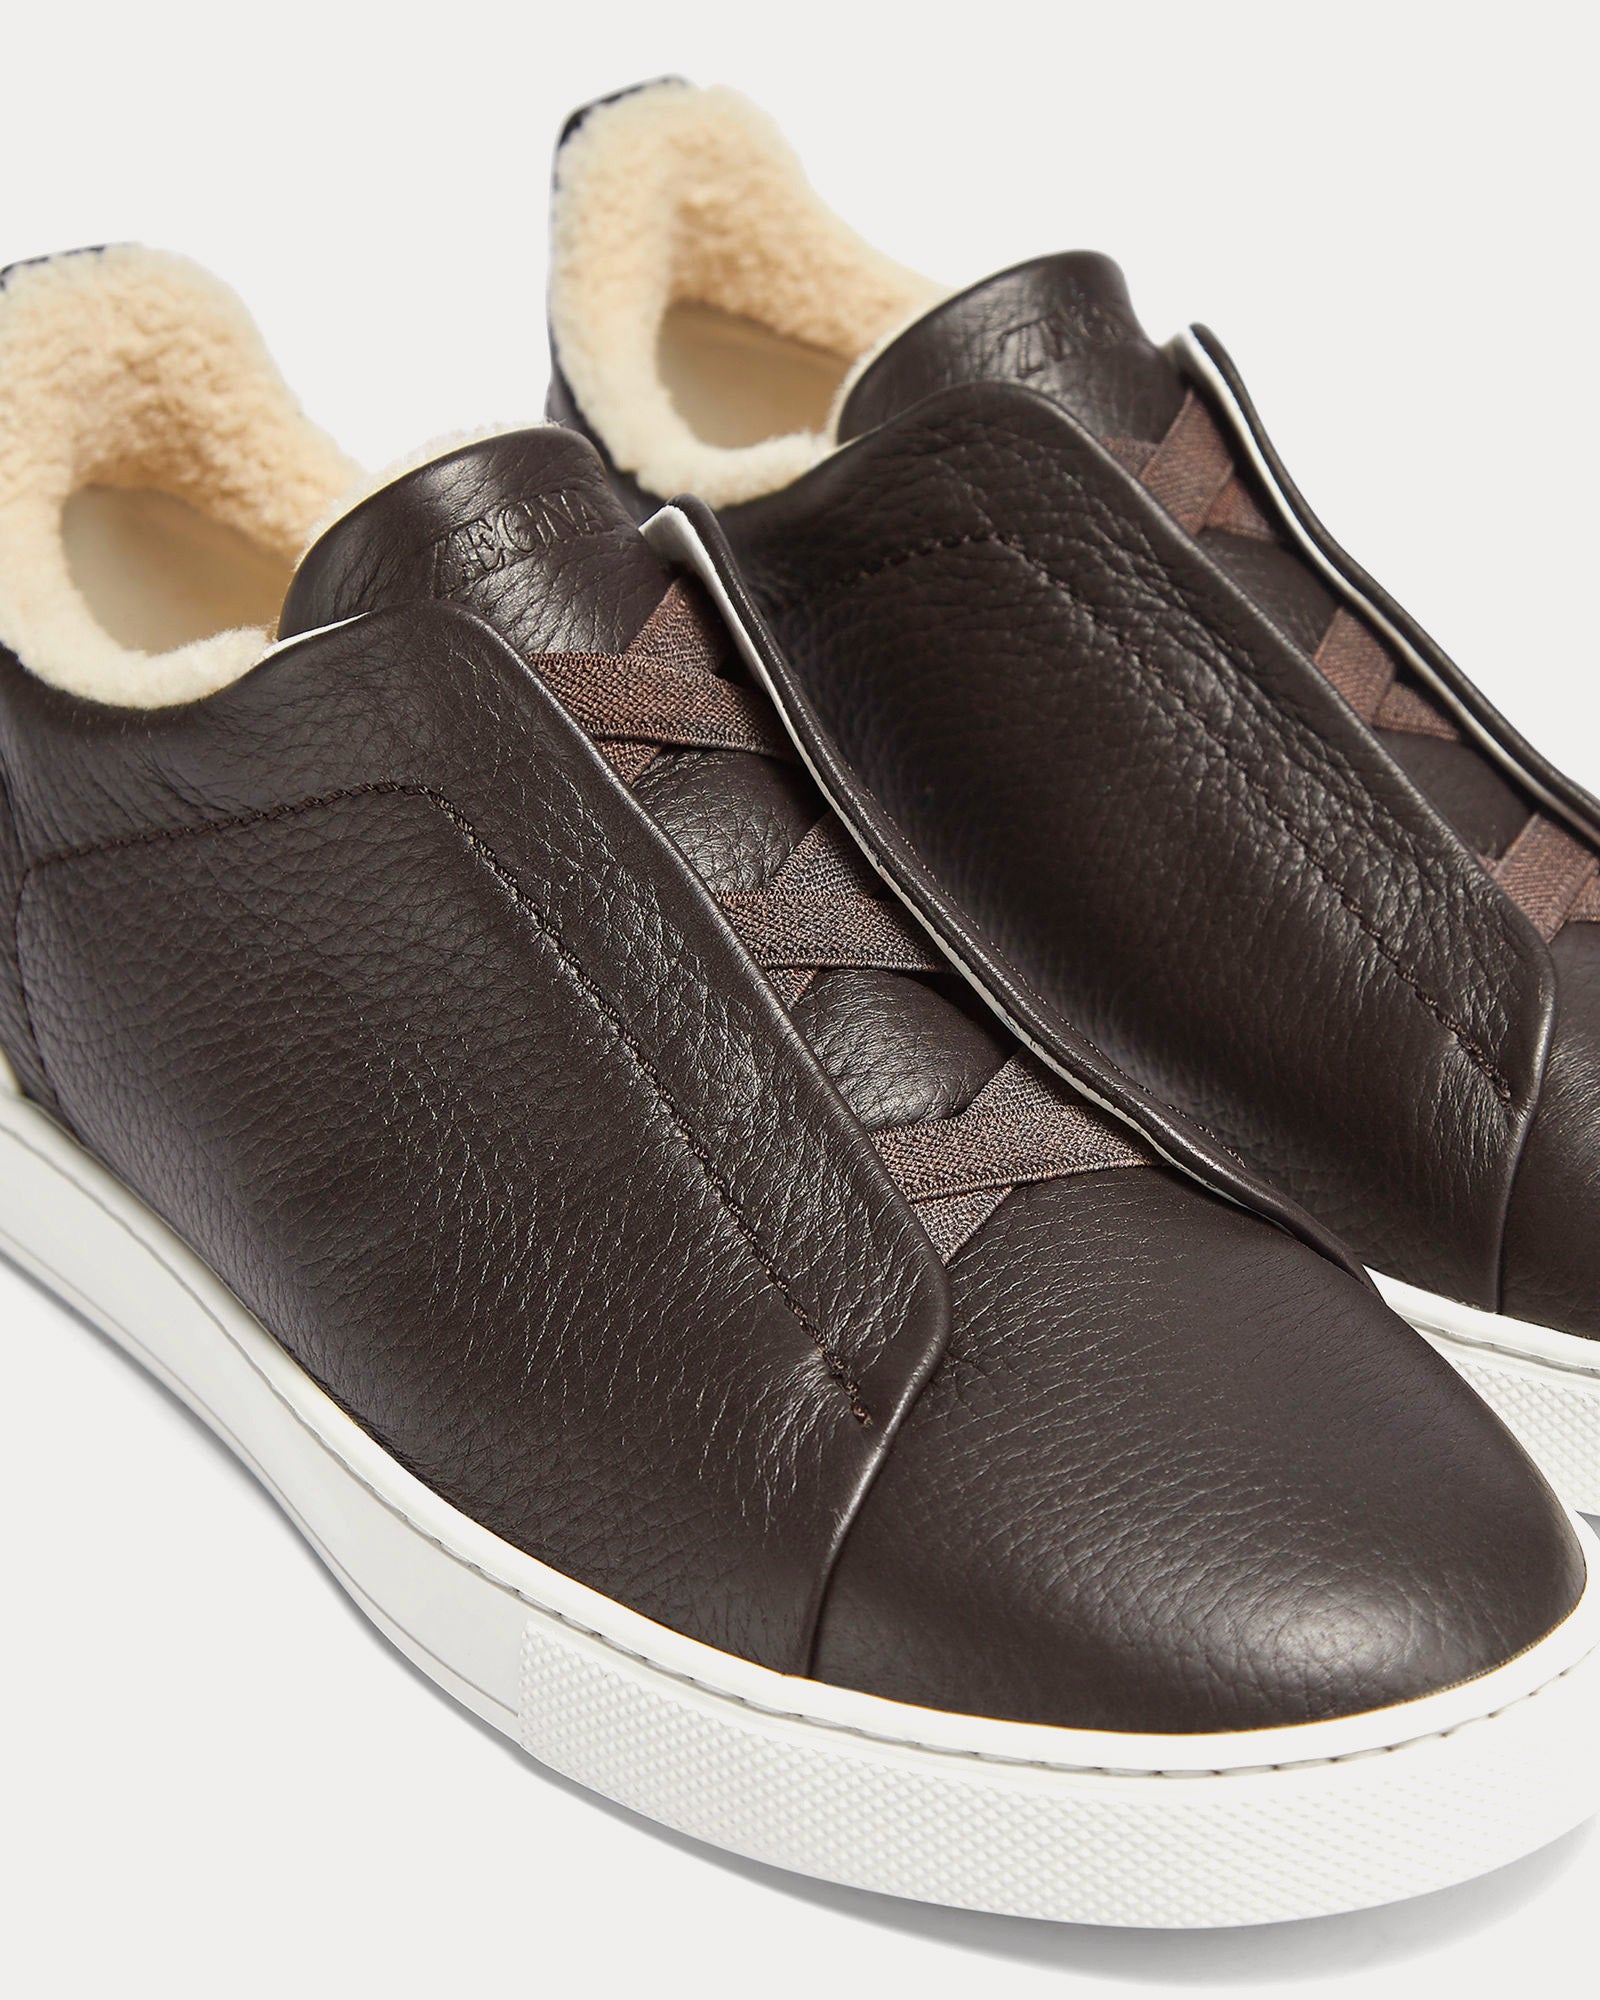 Zegna - Triple Stitch Deerskin & Merino Shearling Dark Brown Slip On Sneakers